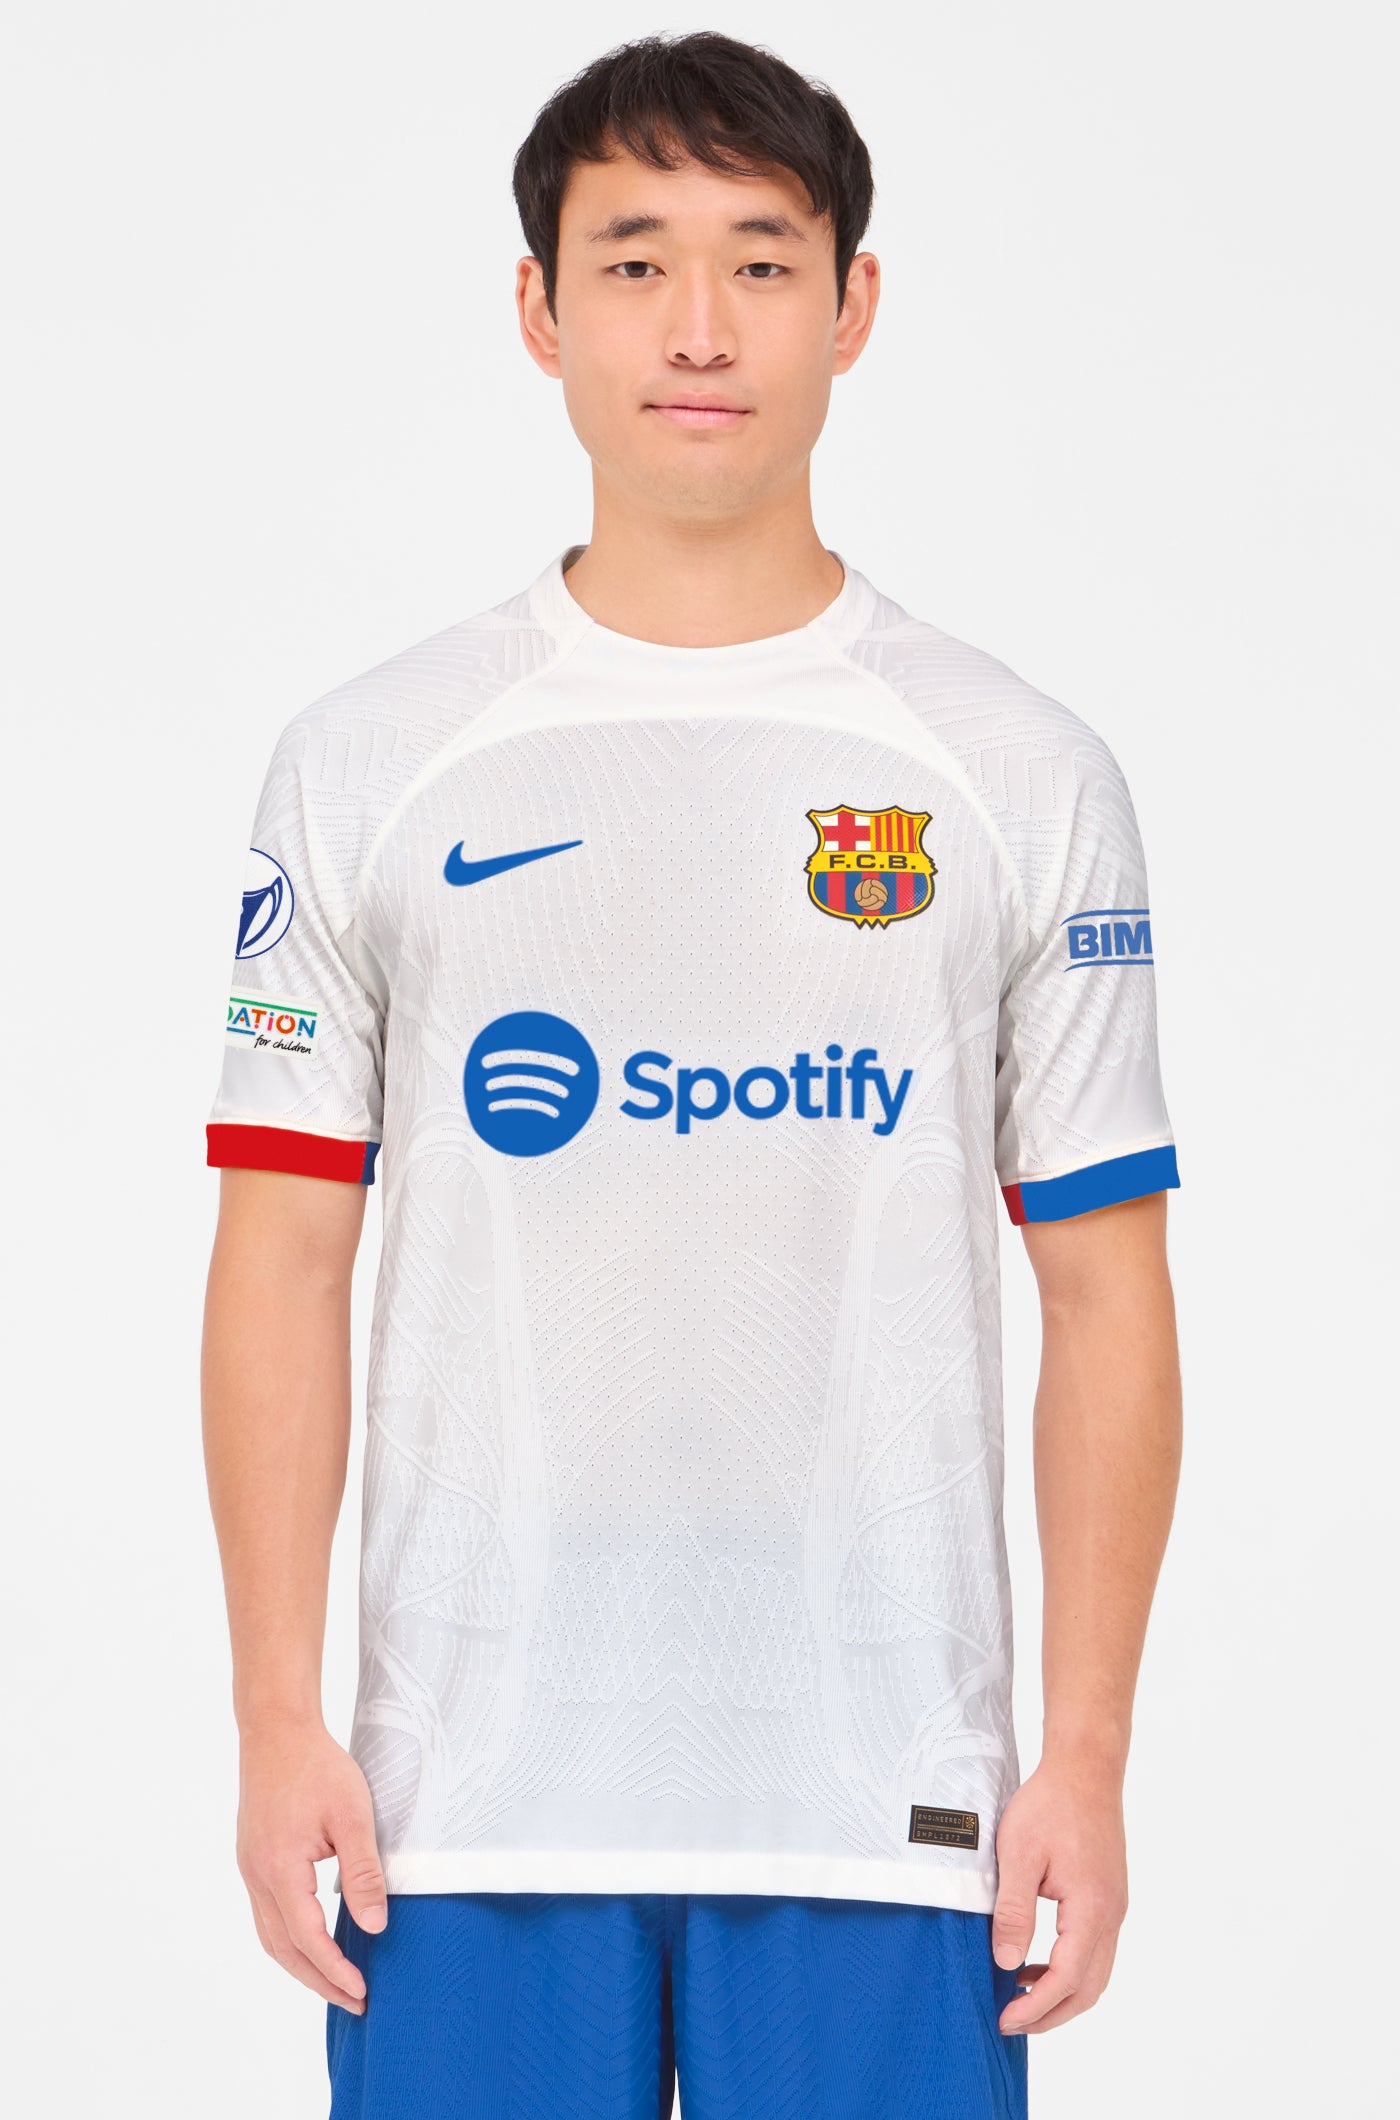 UWCL FC Barcelona away shirt 23/24 Player's Edition - MARIONA